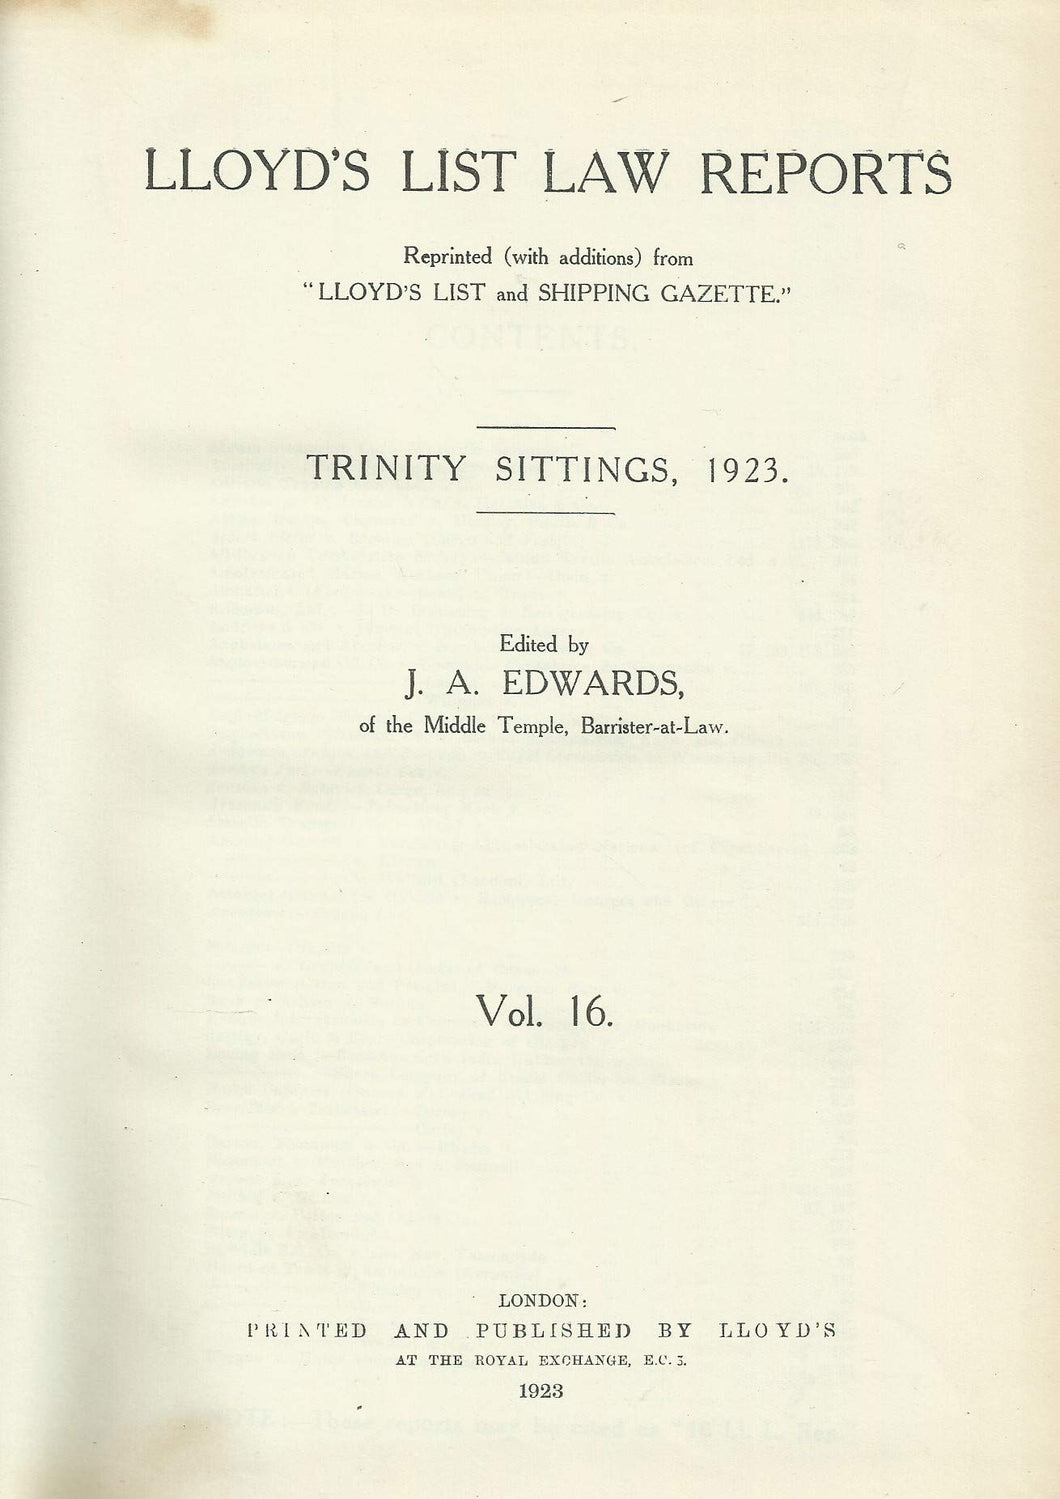 Lloyd's List Law Reports - Volume 16, Trinity Sittings, 1923